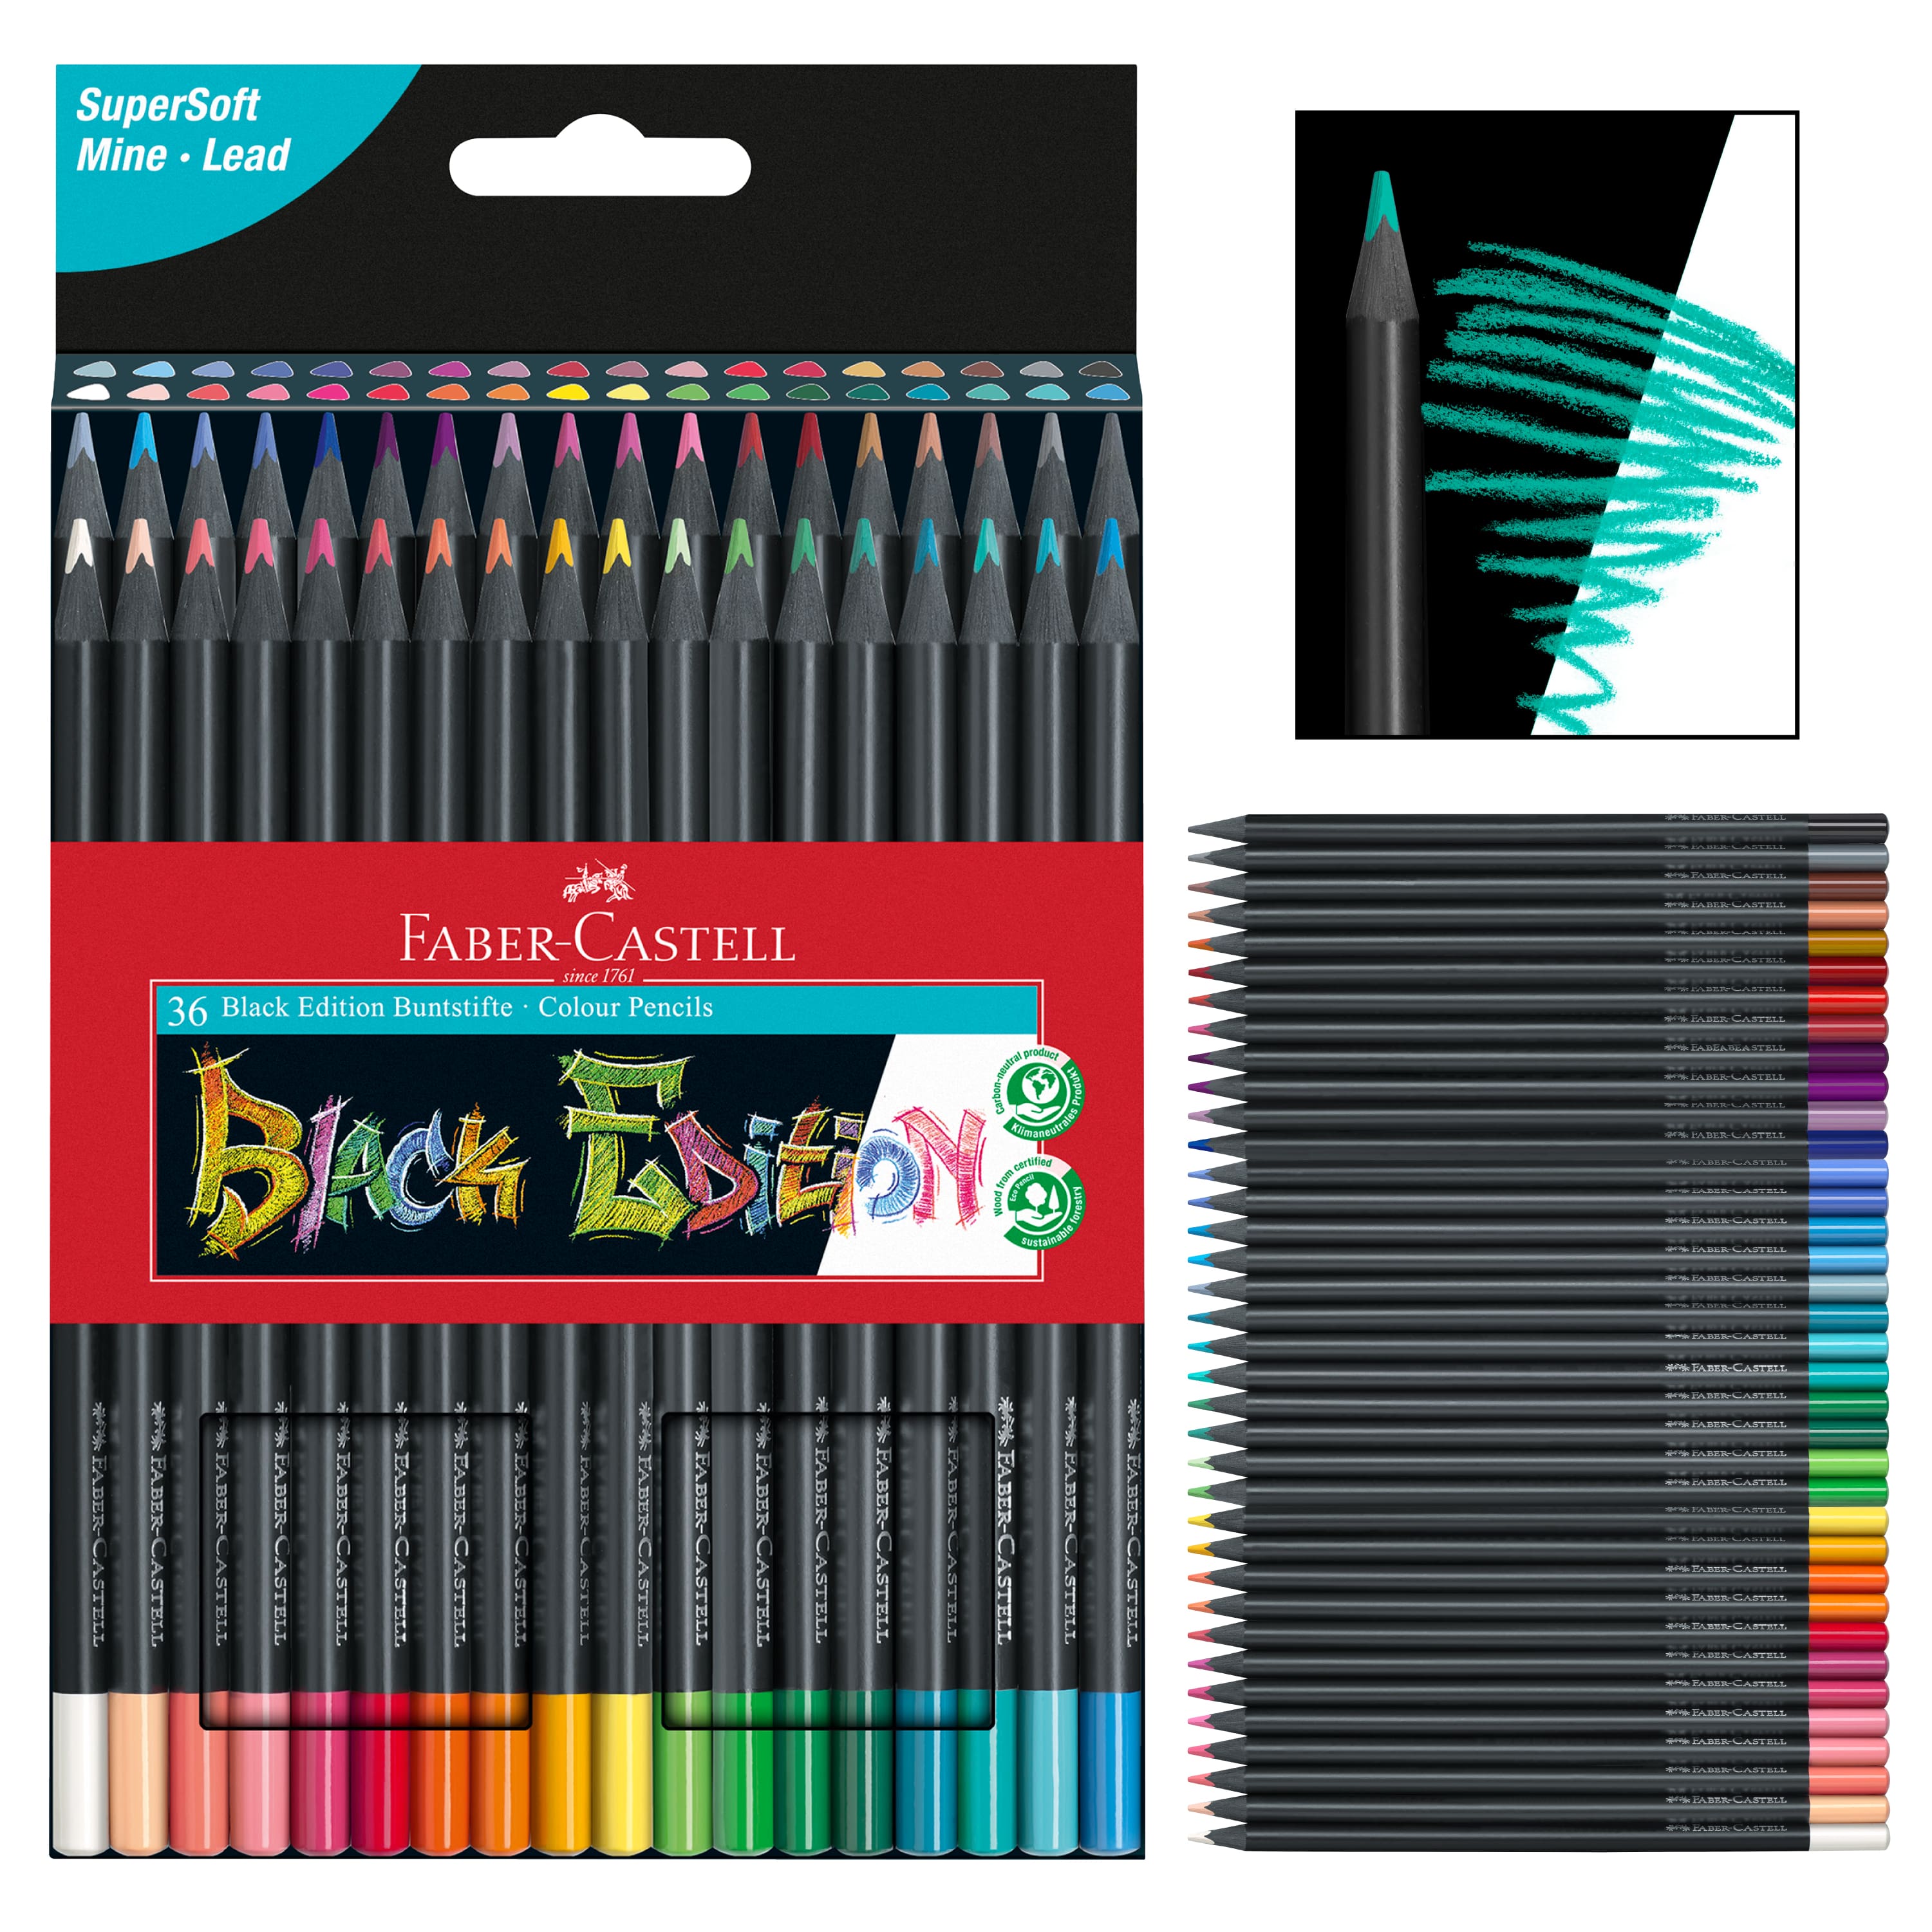 Faber Castell Black Edition Super Soft Colored Pencils. — The Art